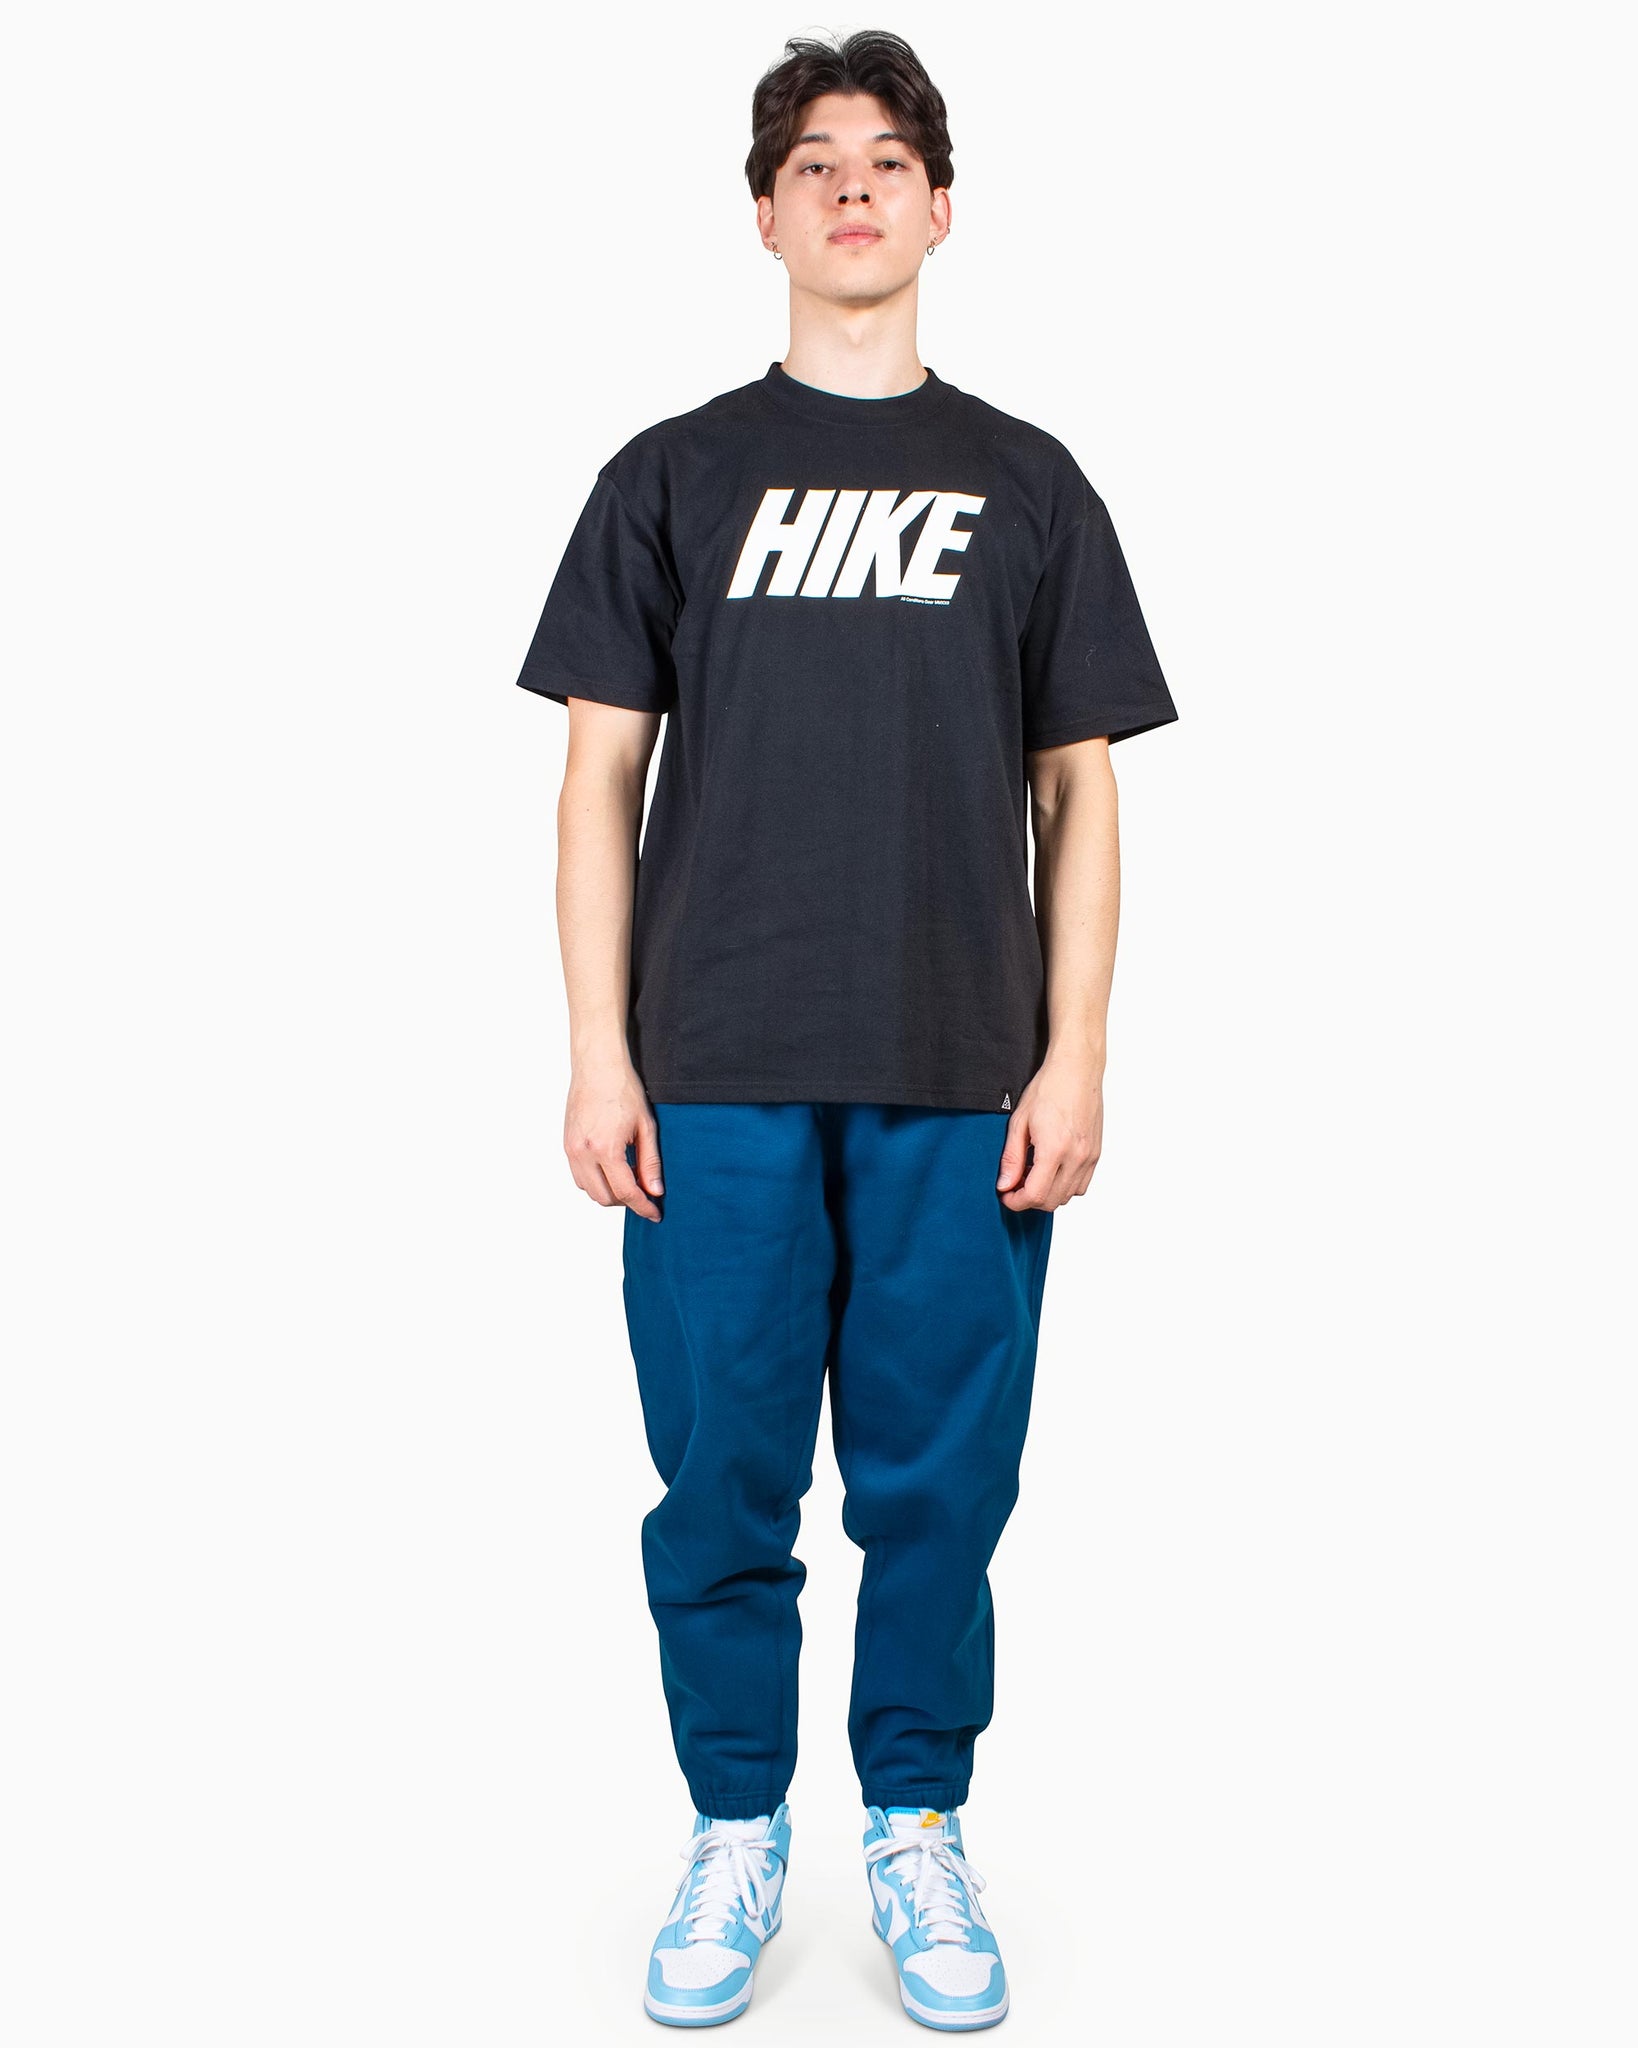 Nike ACG 'HIKE' T-Shirt Black Model Front